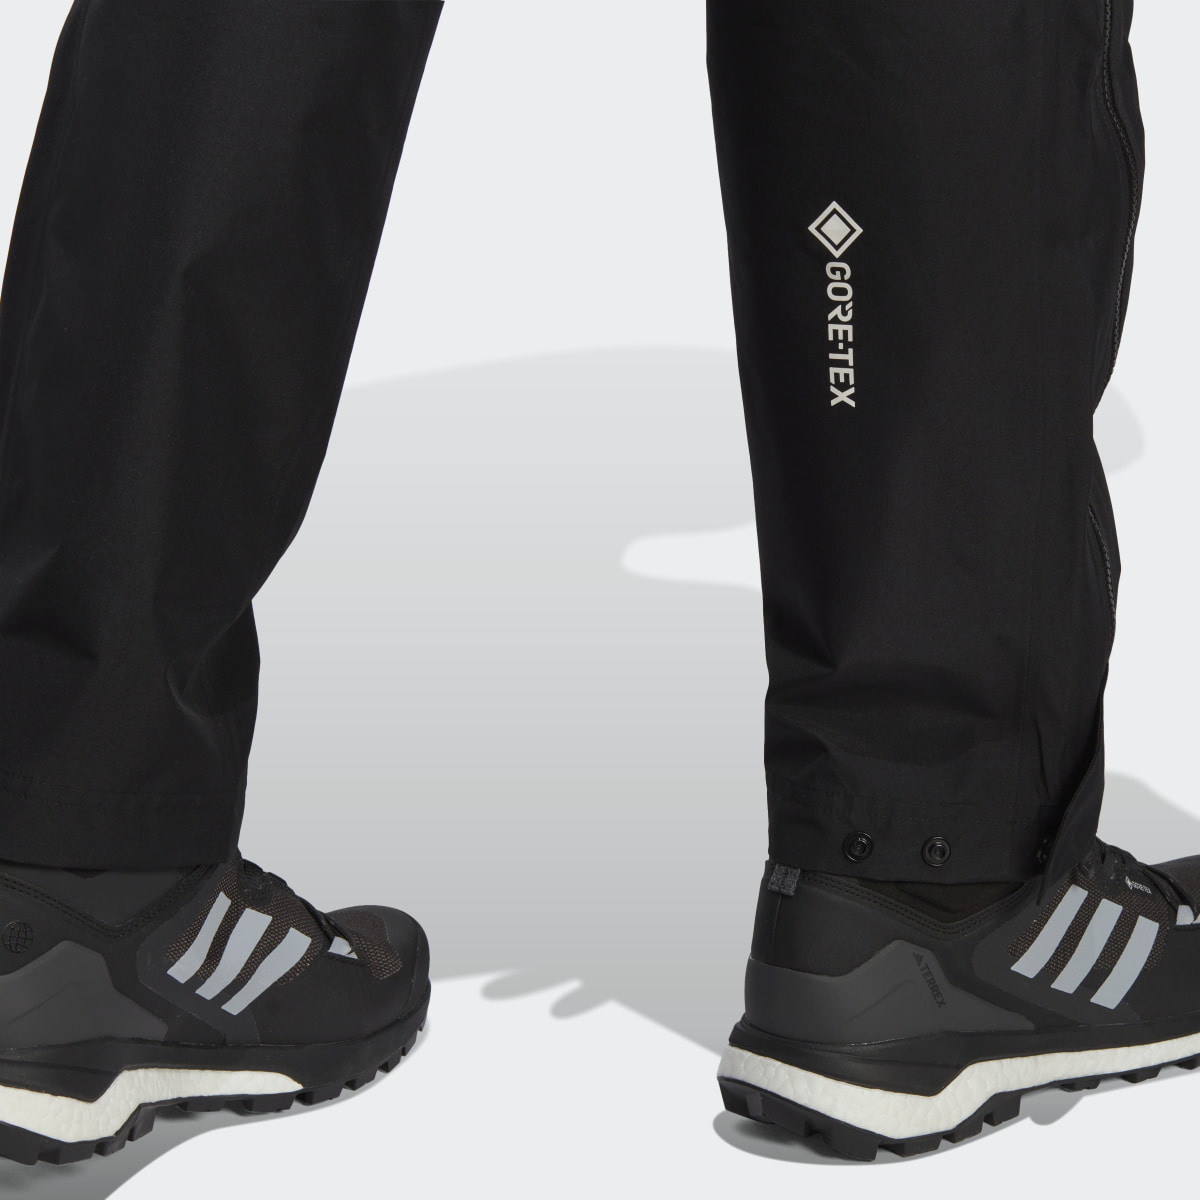 Adidas Terrex GORE-TEX Paclite Rain Pants. 6